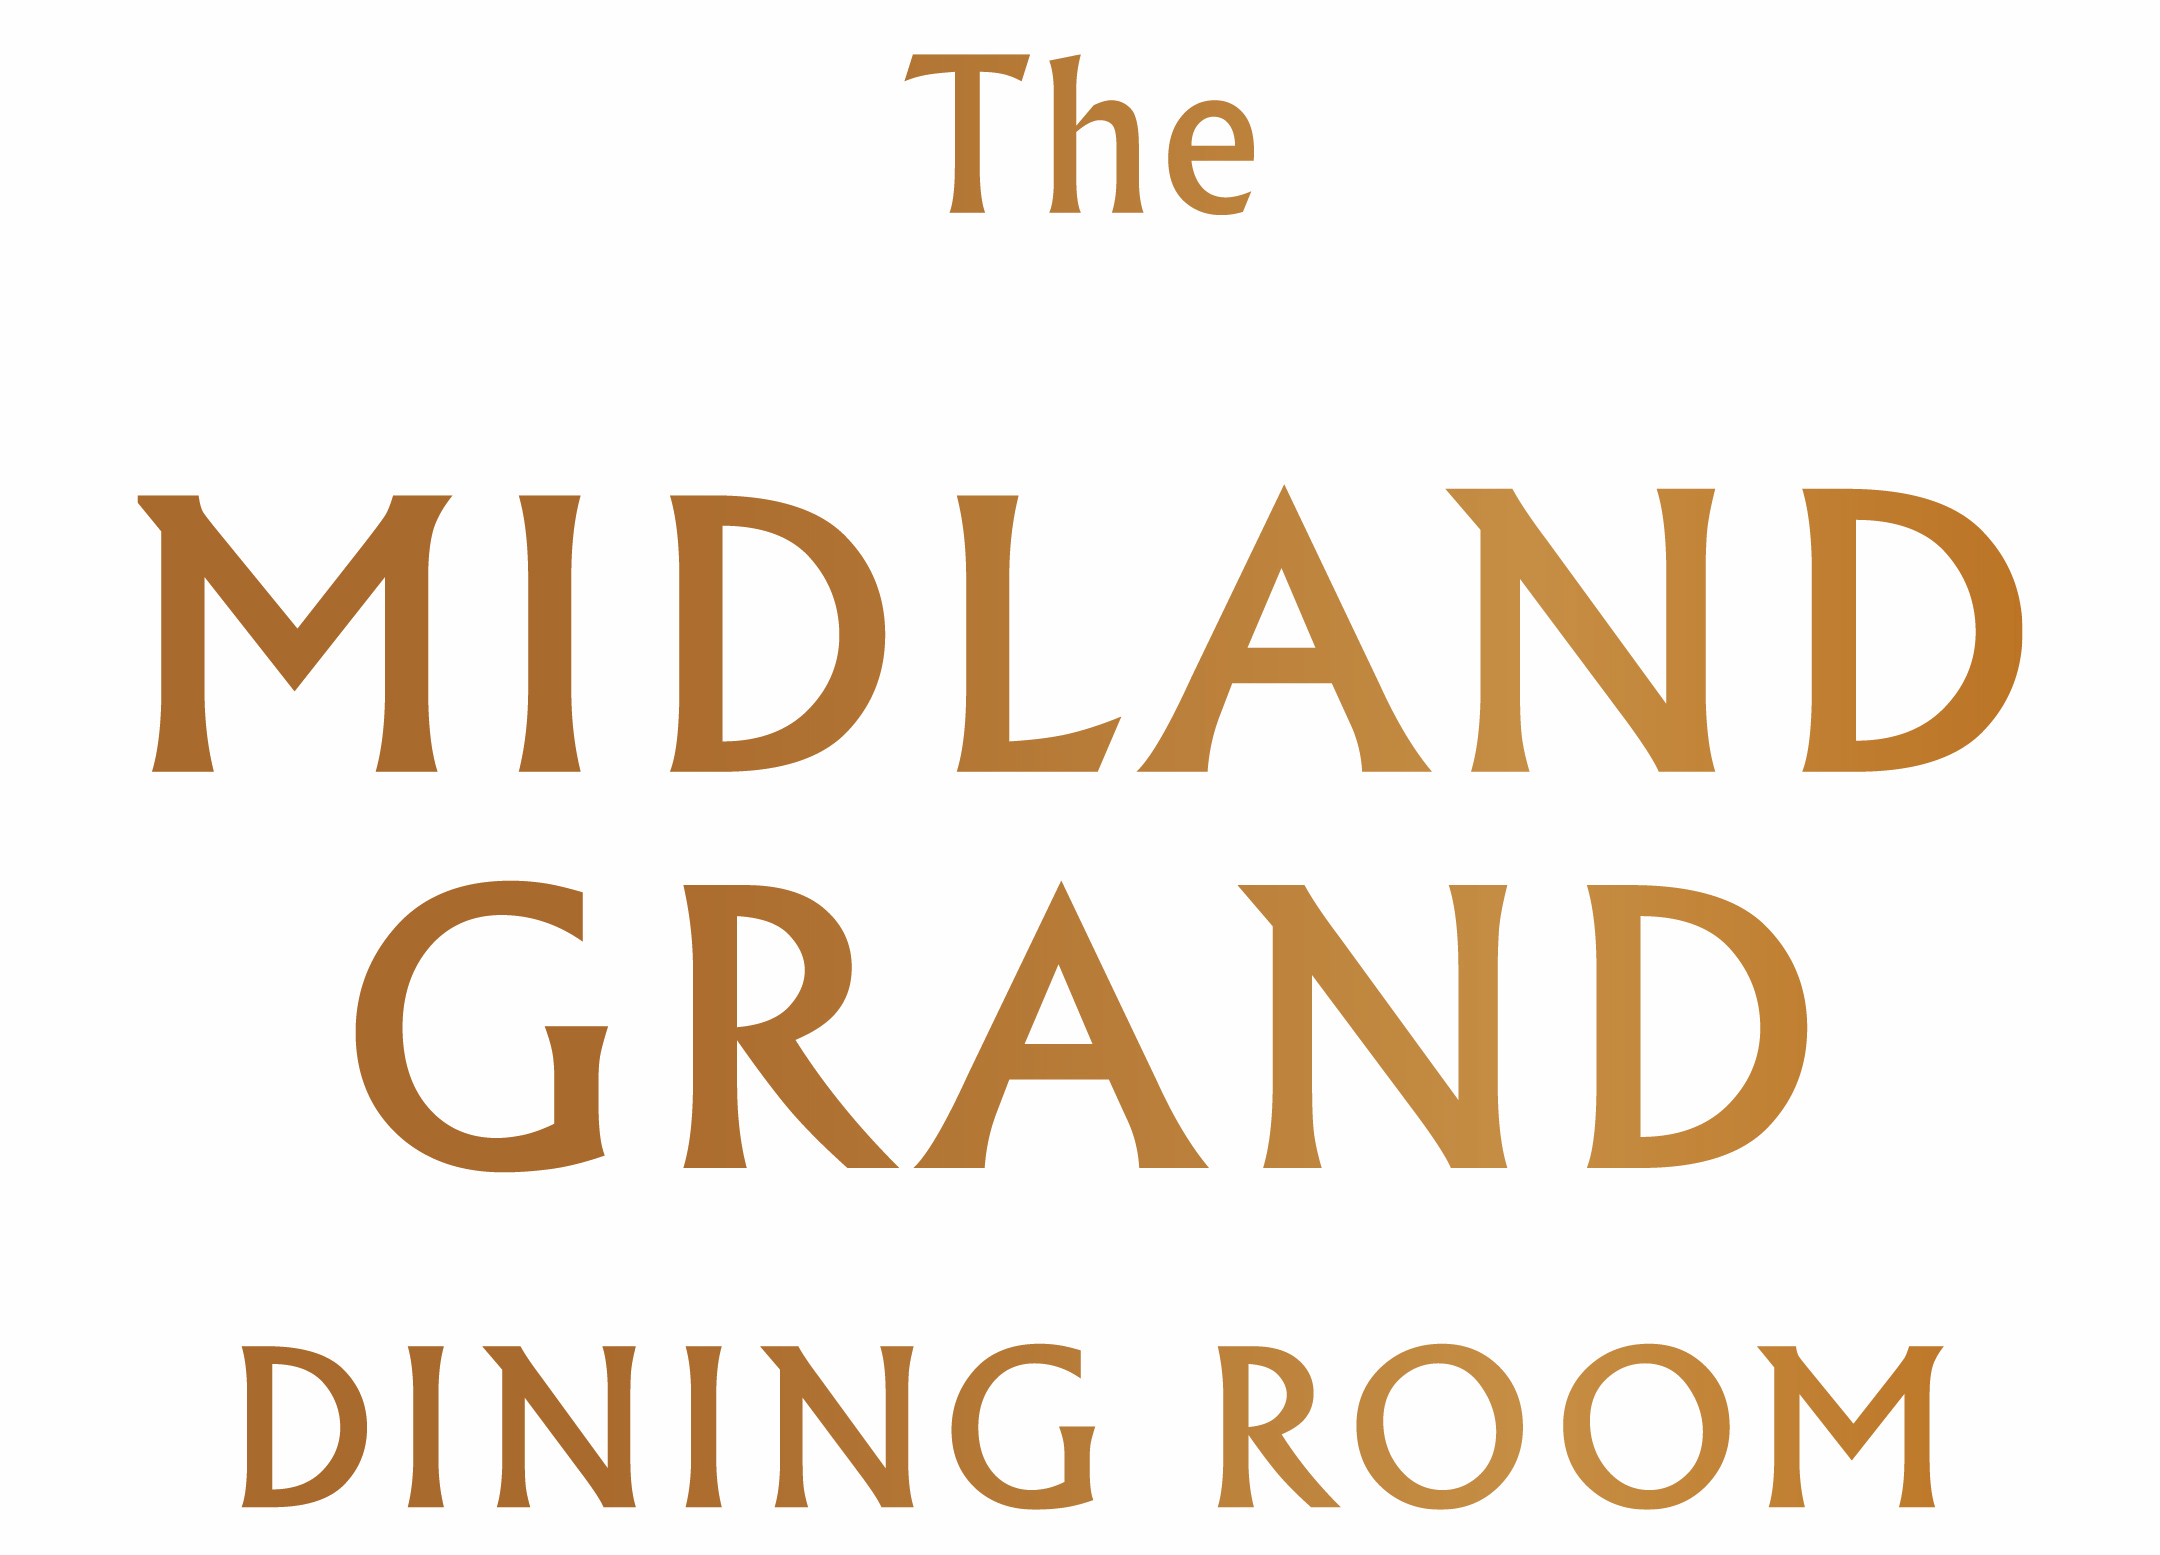 The Midland Grand Dining Room logo